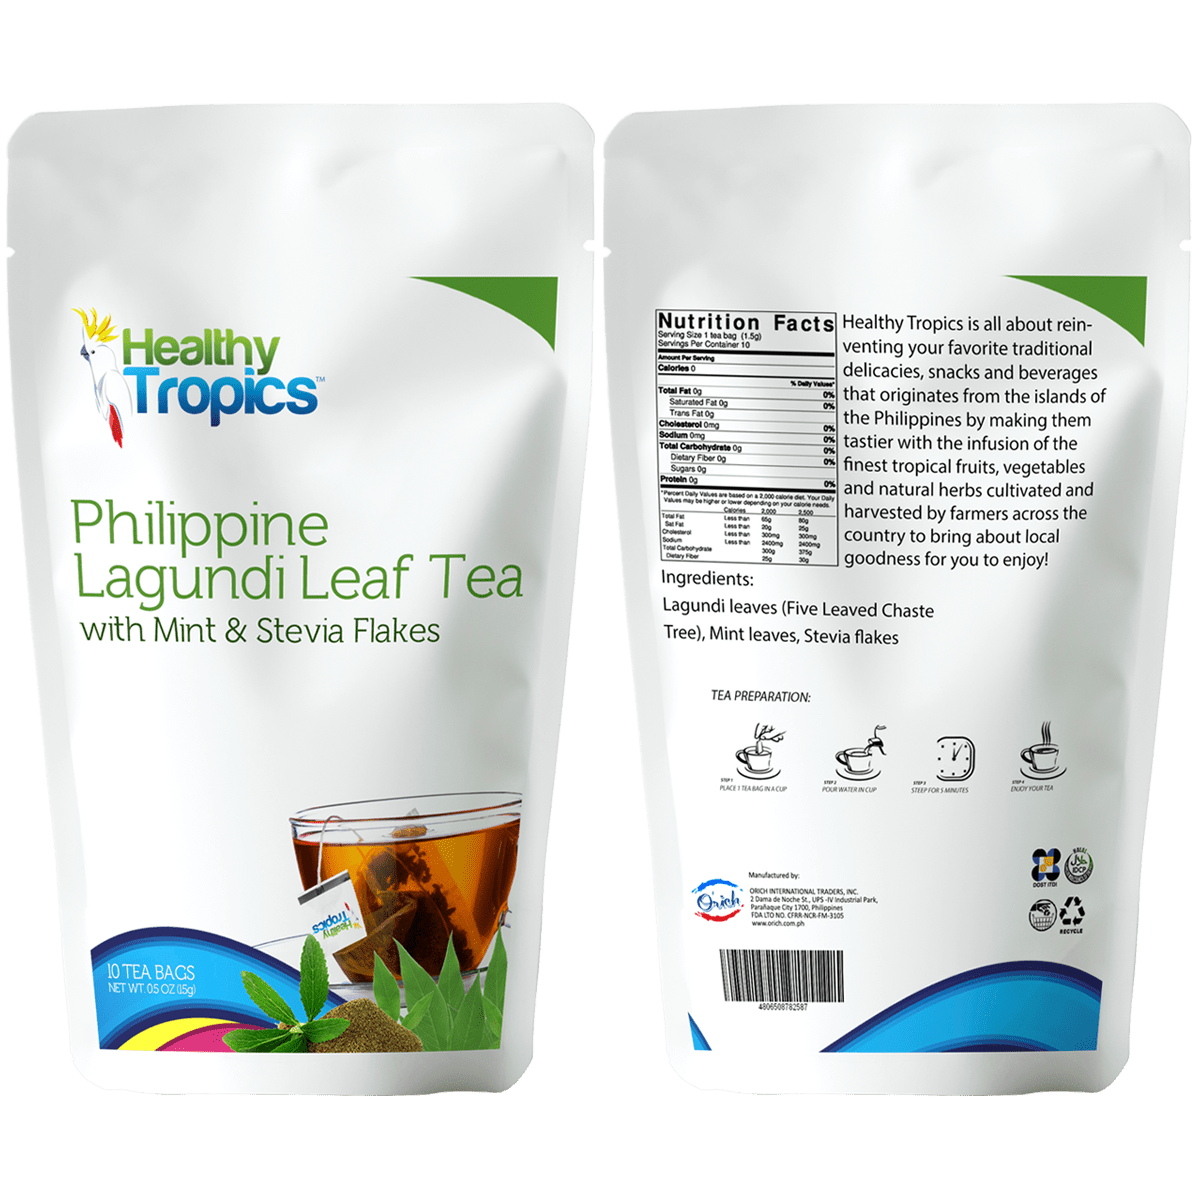 Healthy Tropics Philippine Lagundi Leaf Tea (Five Leaved Chaste Tree) with Mint and Stevia Flakes, 15g